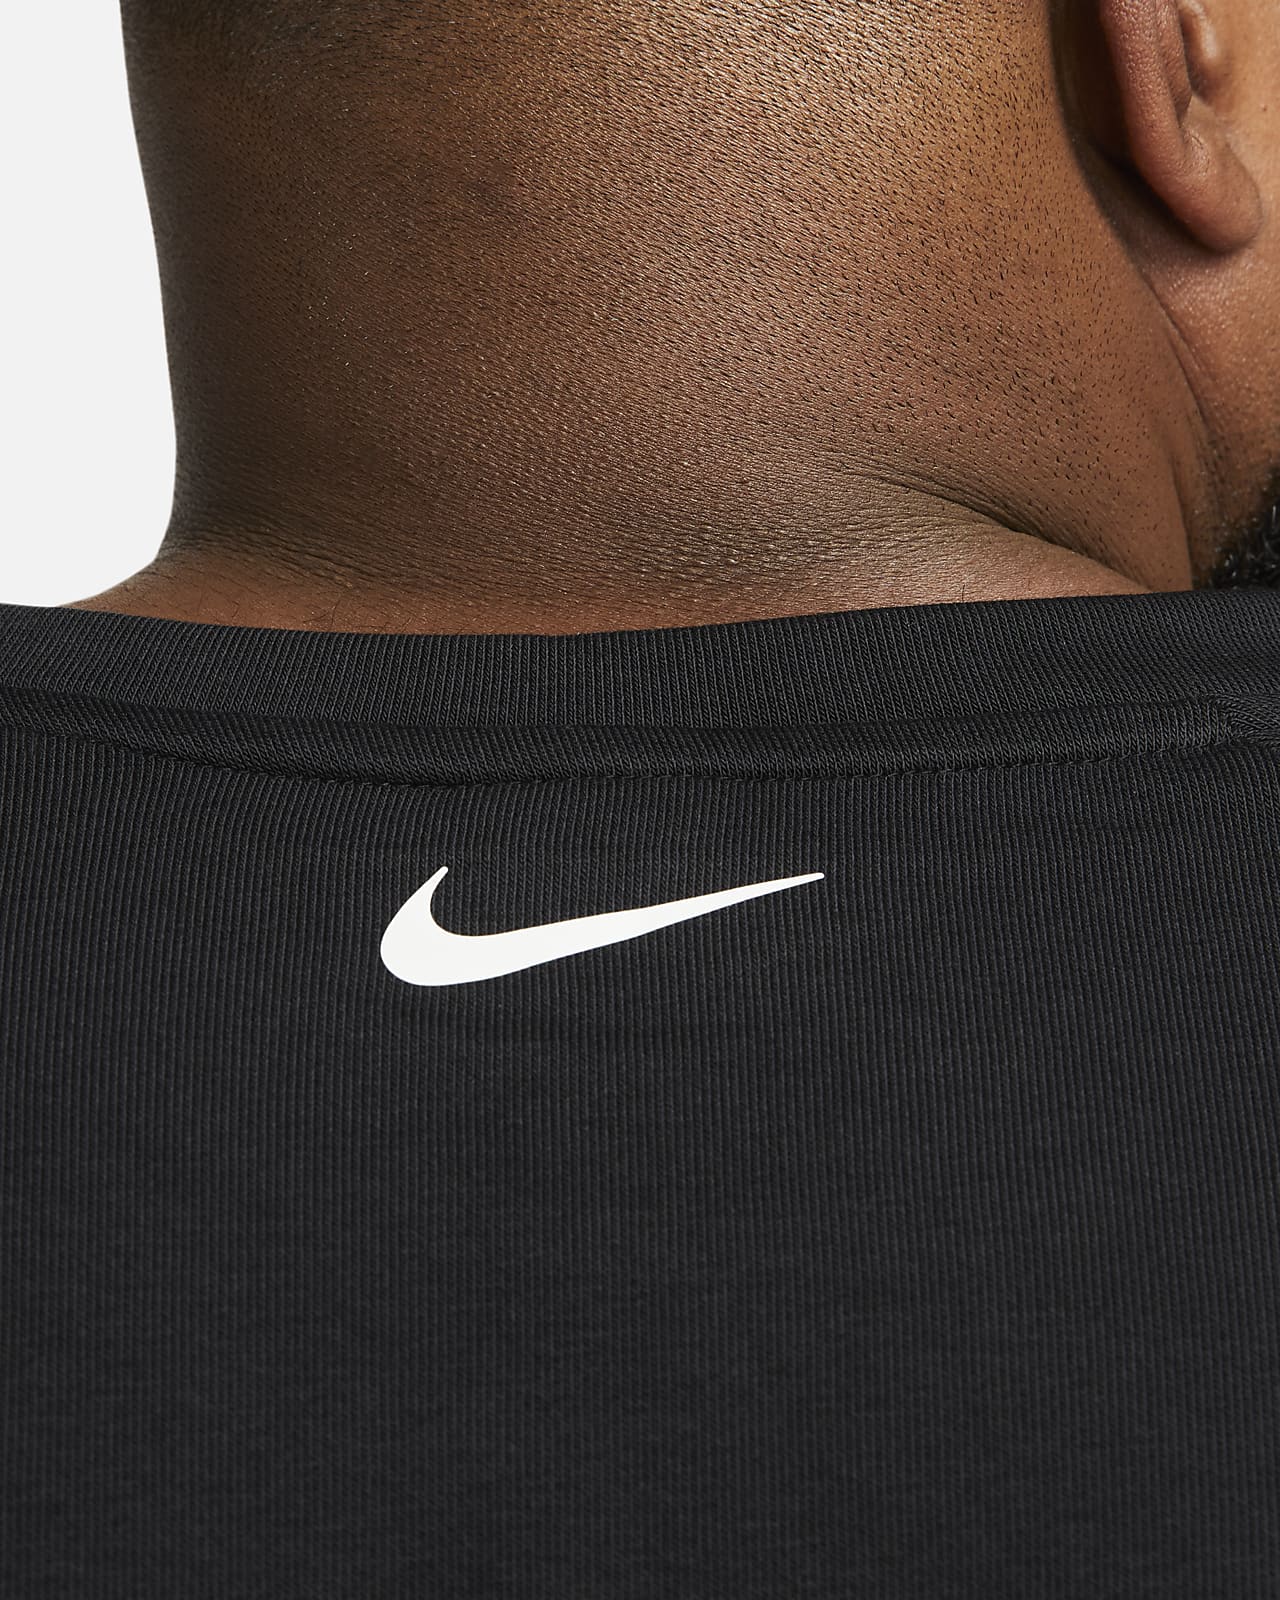 Nike Dri-FIT Long-Sleeve Fitness Top. Nike.com